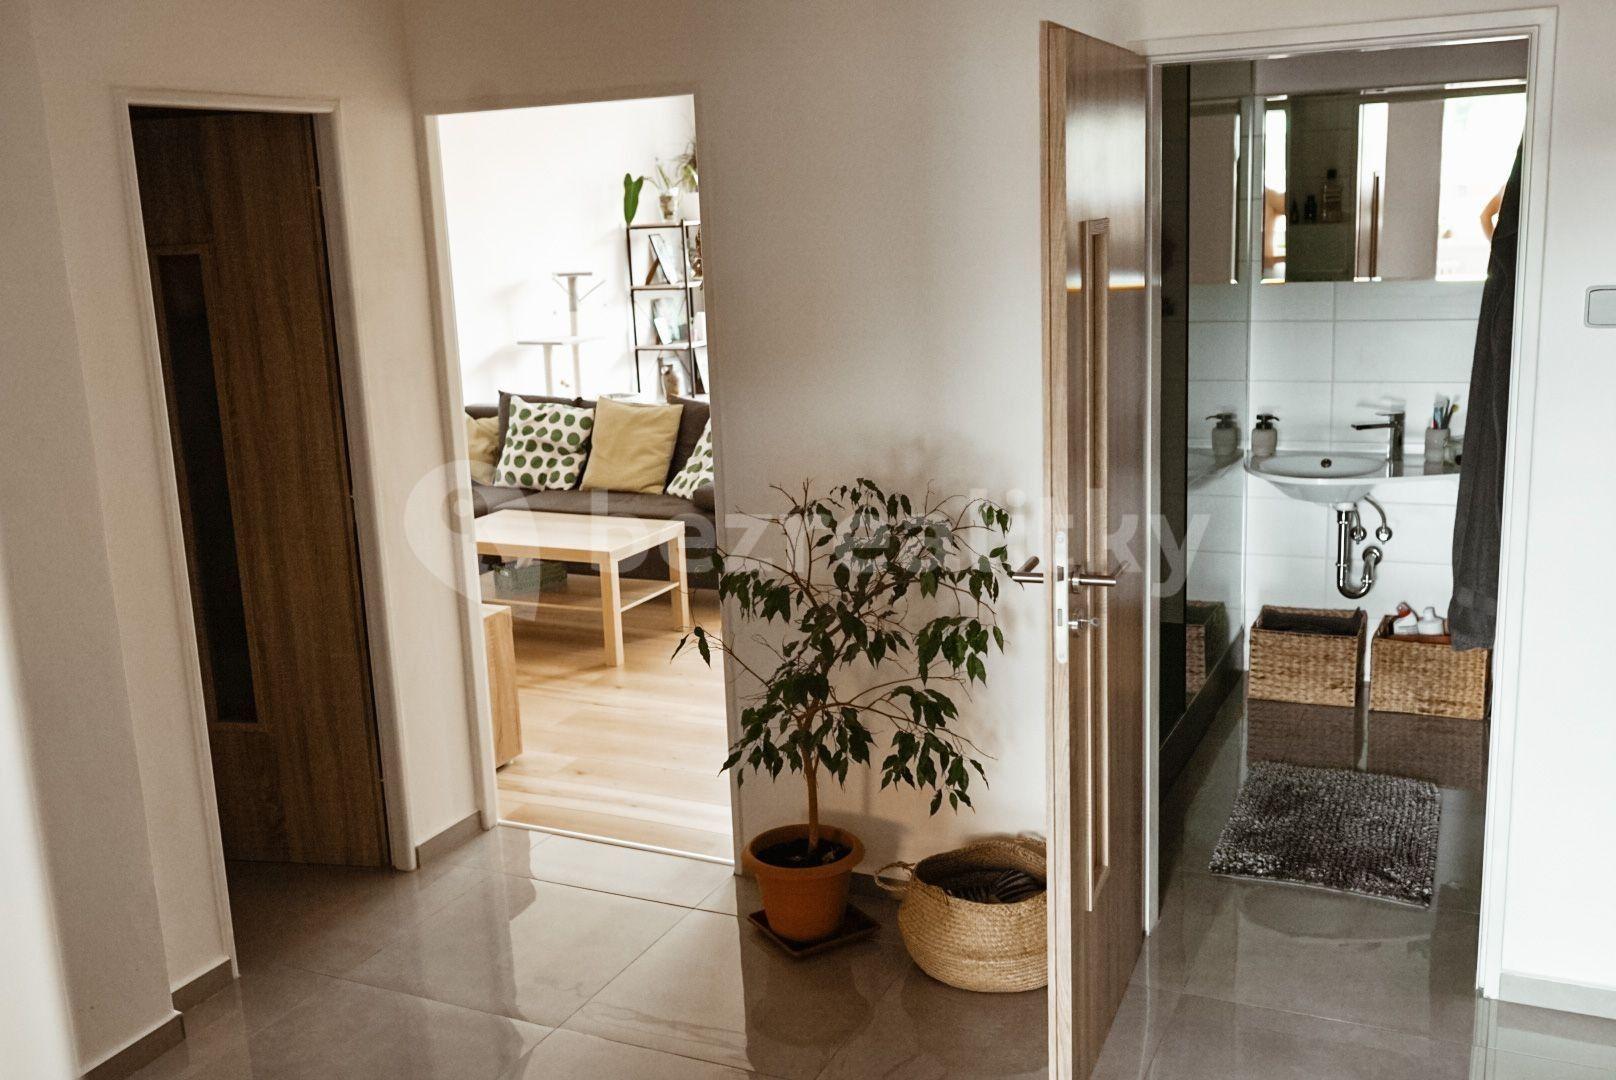 2 bedroom with open-plan kitchen flat for sale, 69 m², Rovná, Teplice, Ústecký Region